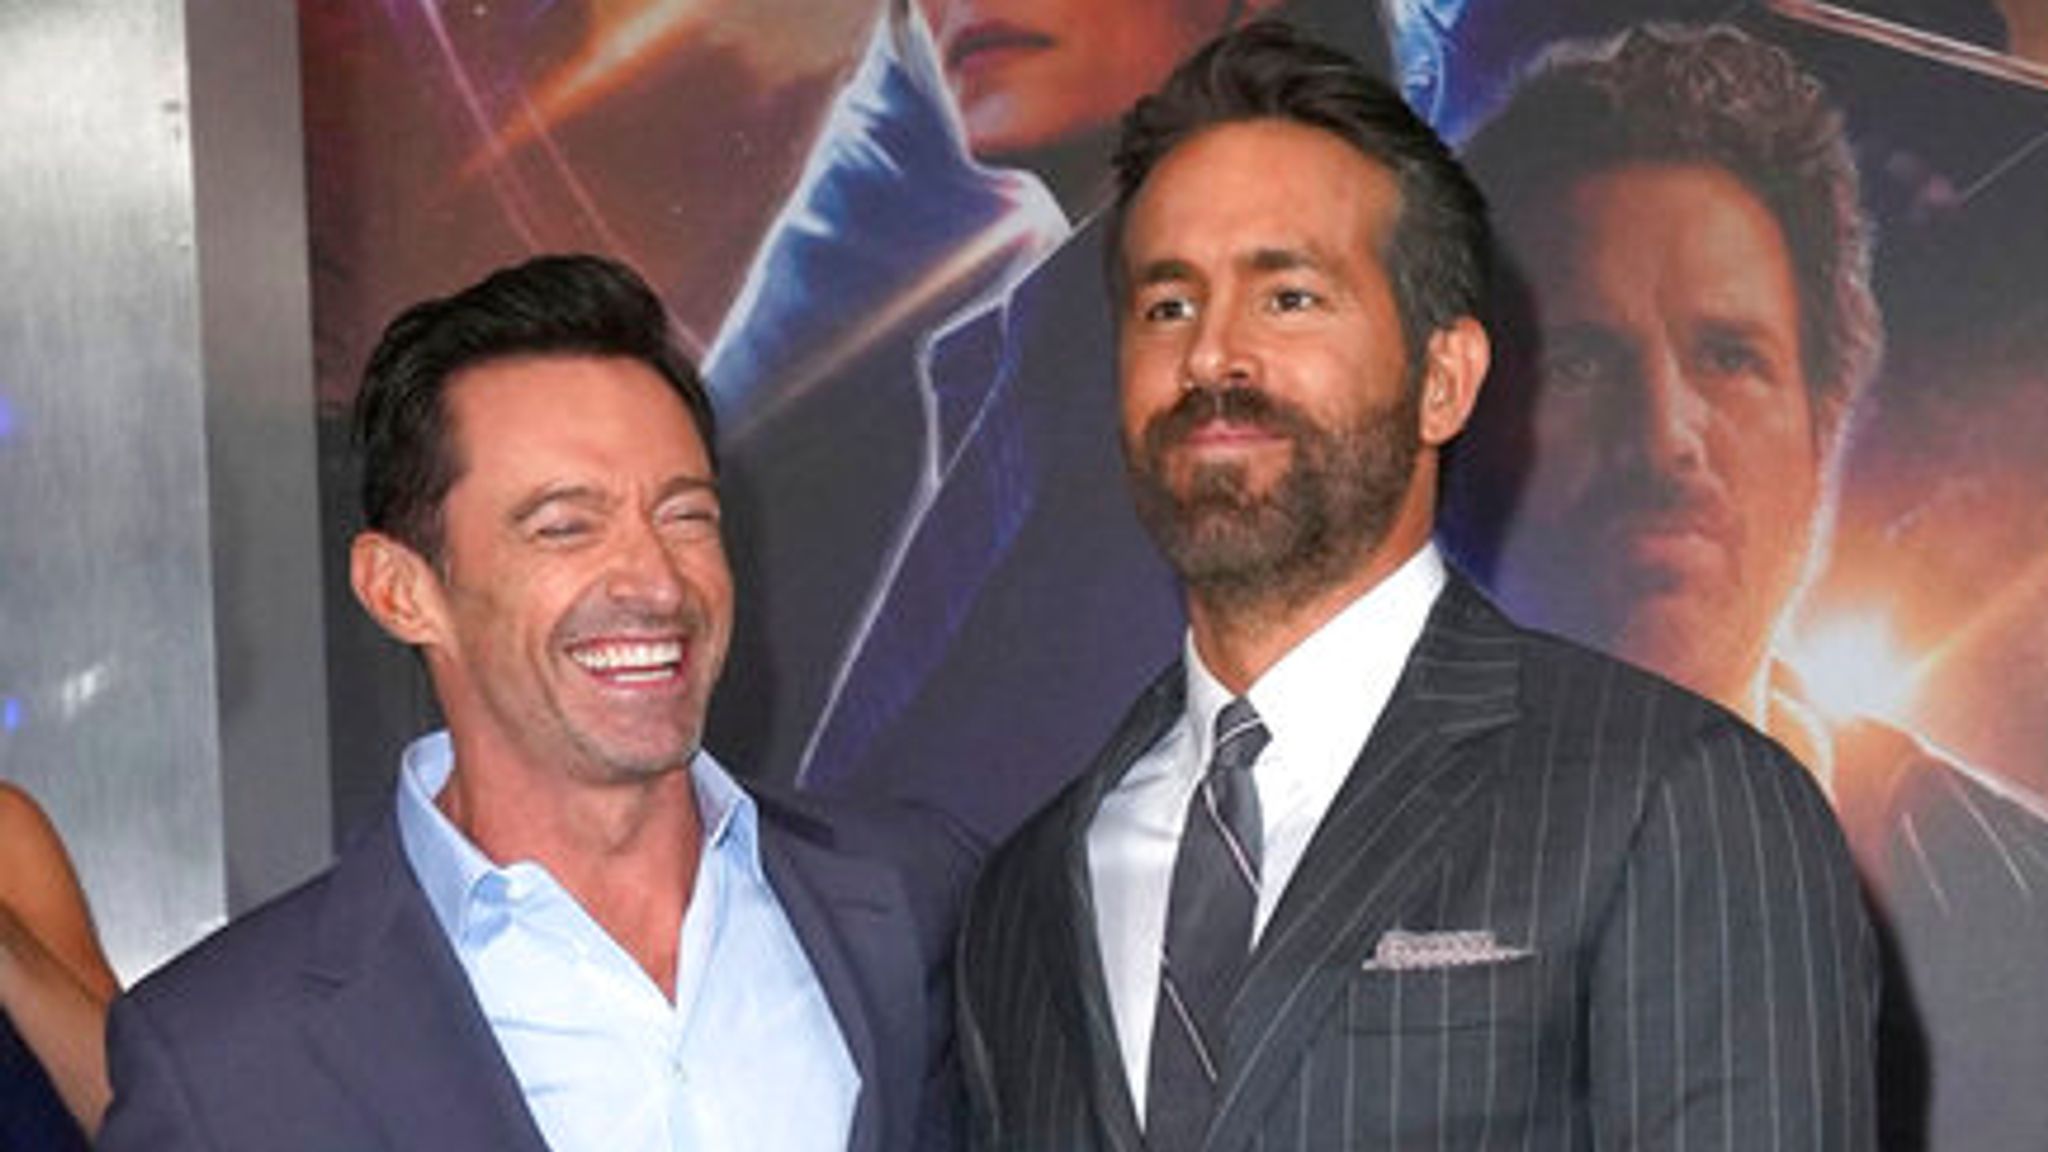 Hugh Jackman Joins Deadpool 3 With Ryan Reynolds